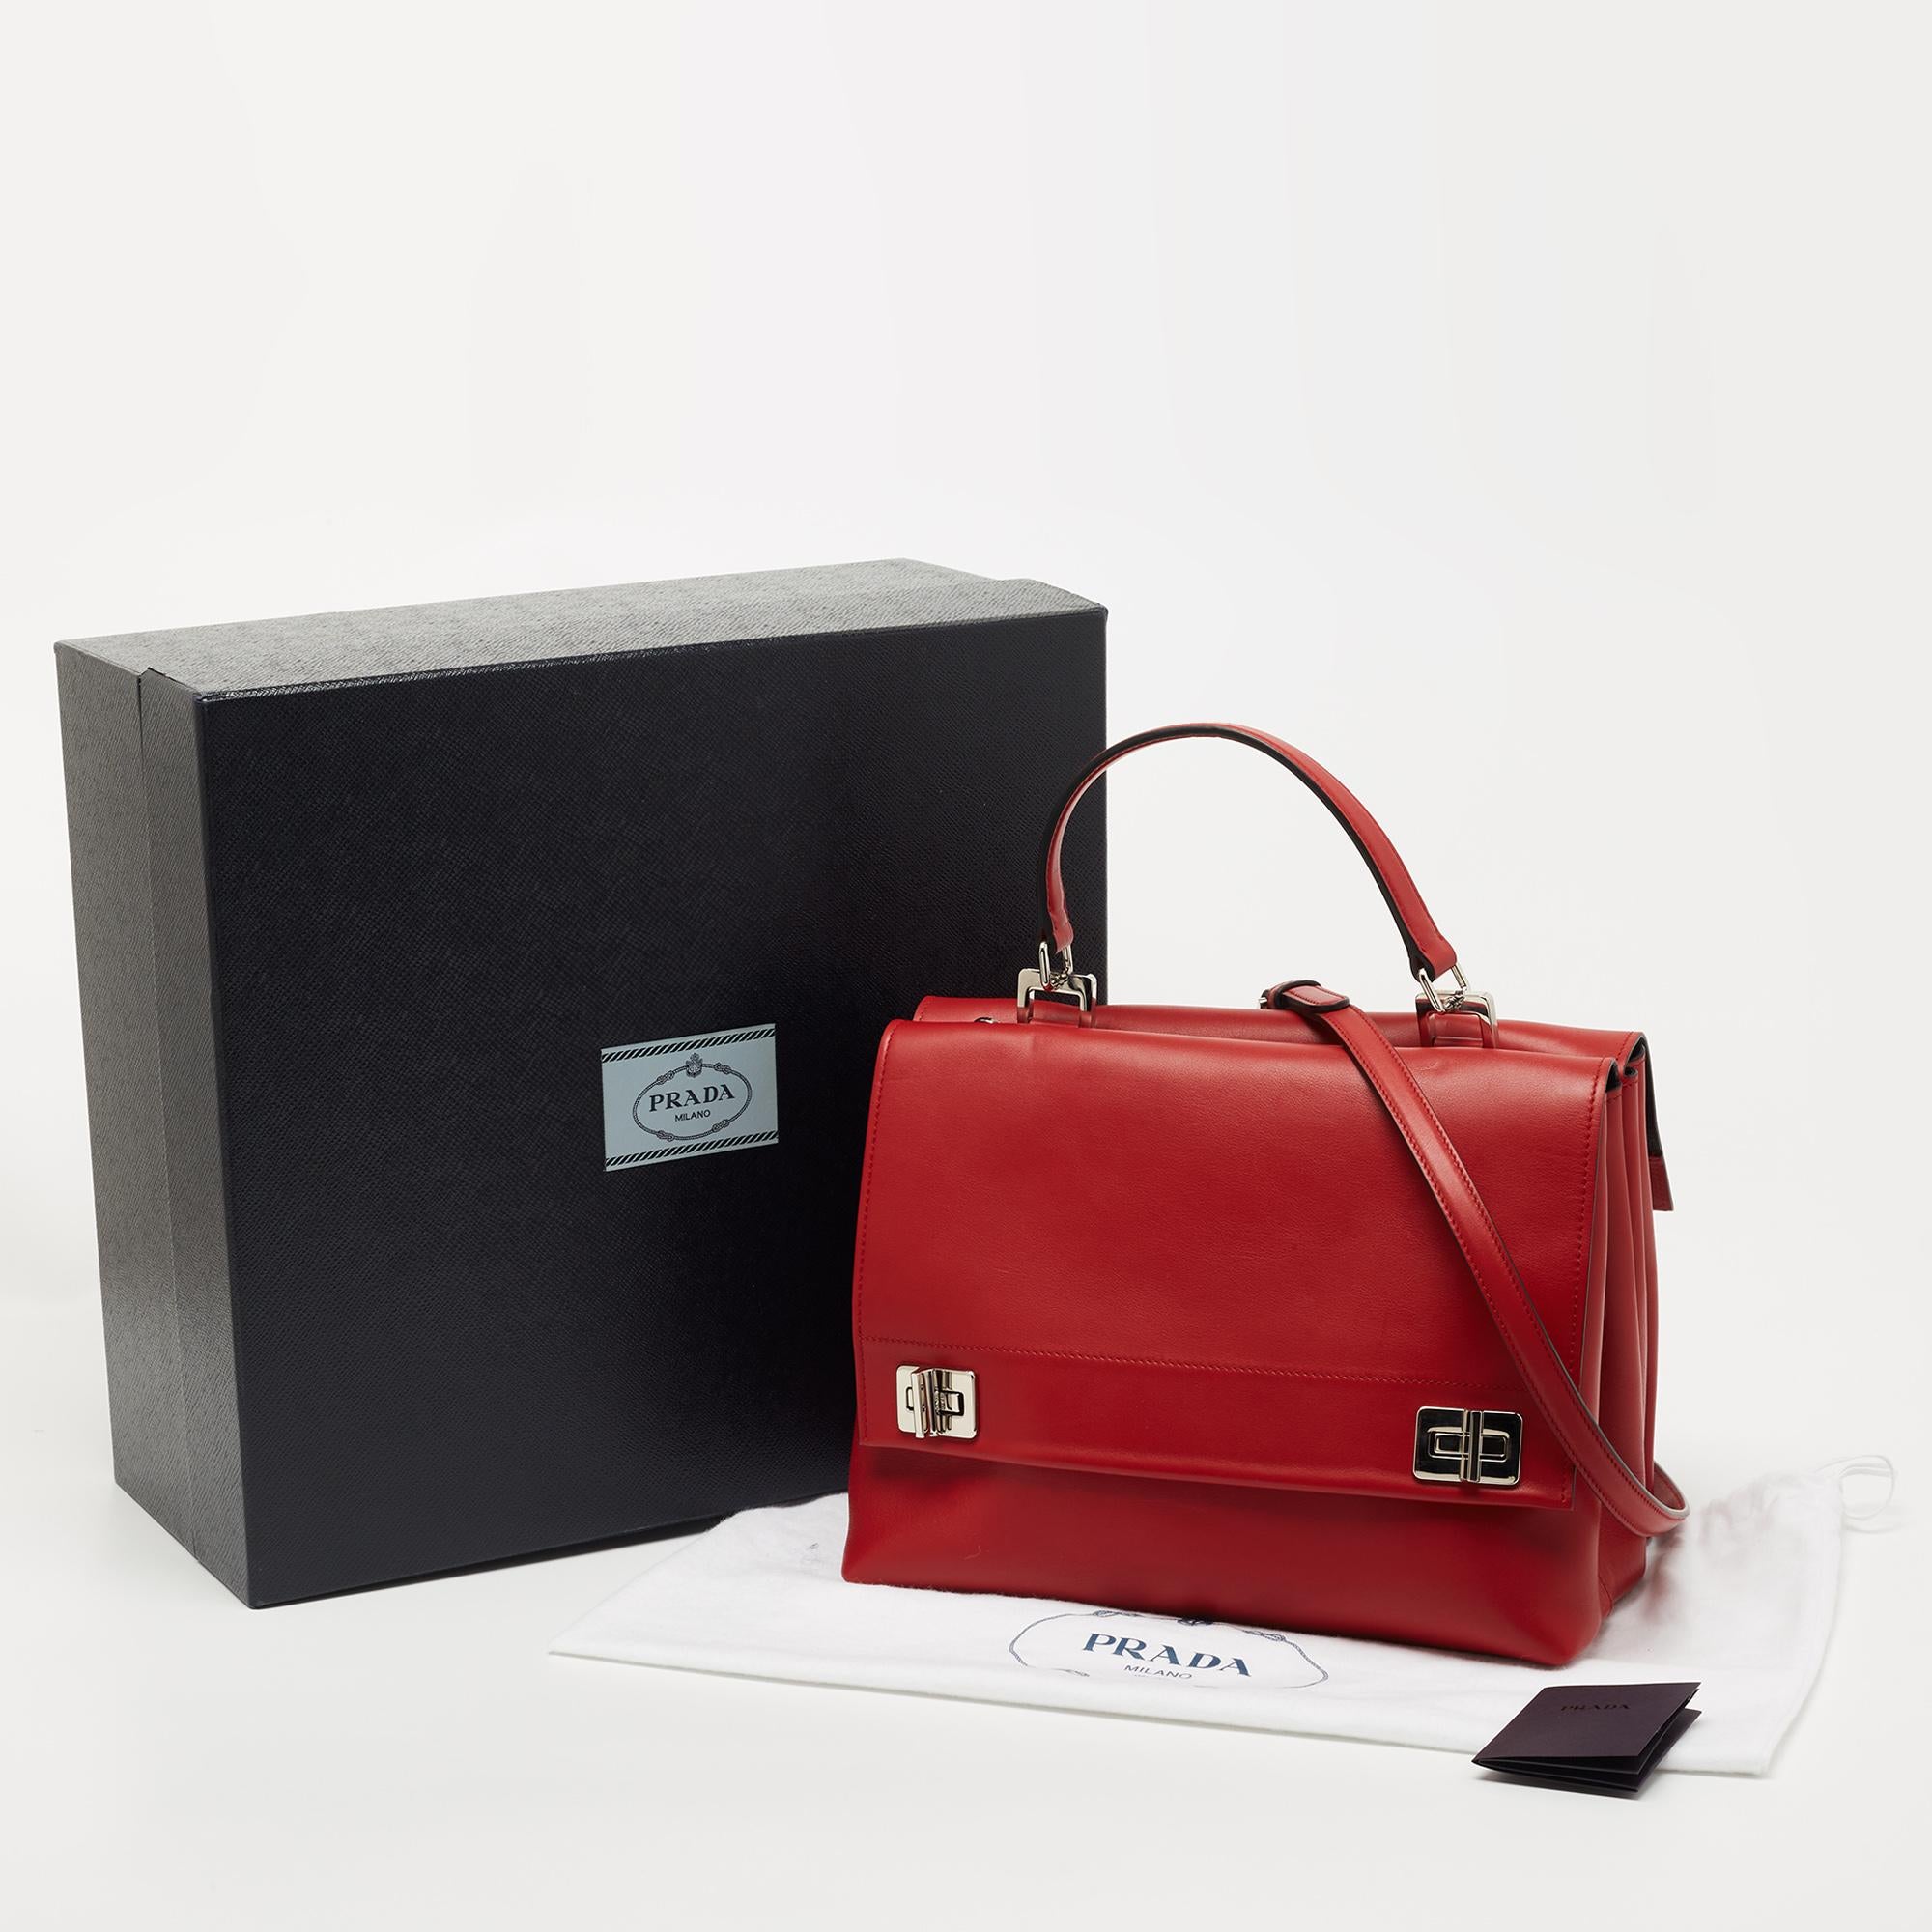 Prada Red Leather Top Handle Bag 11